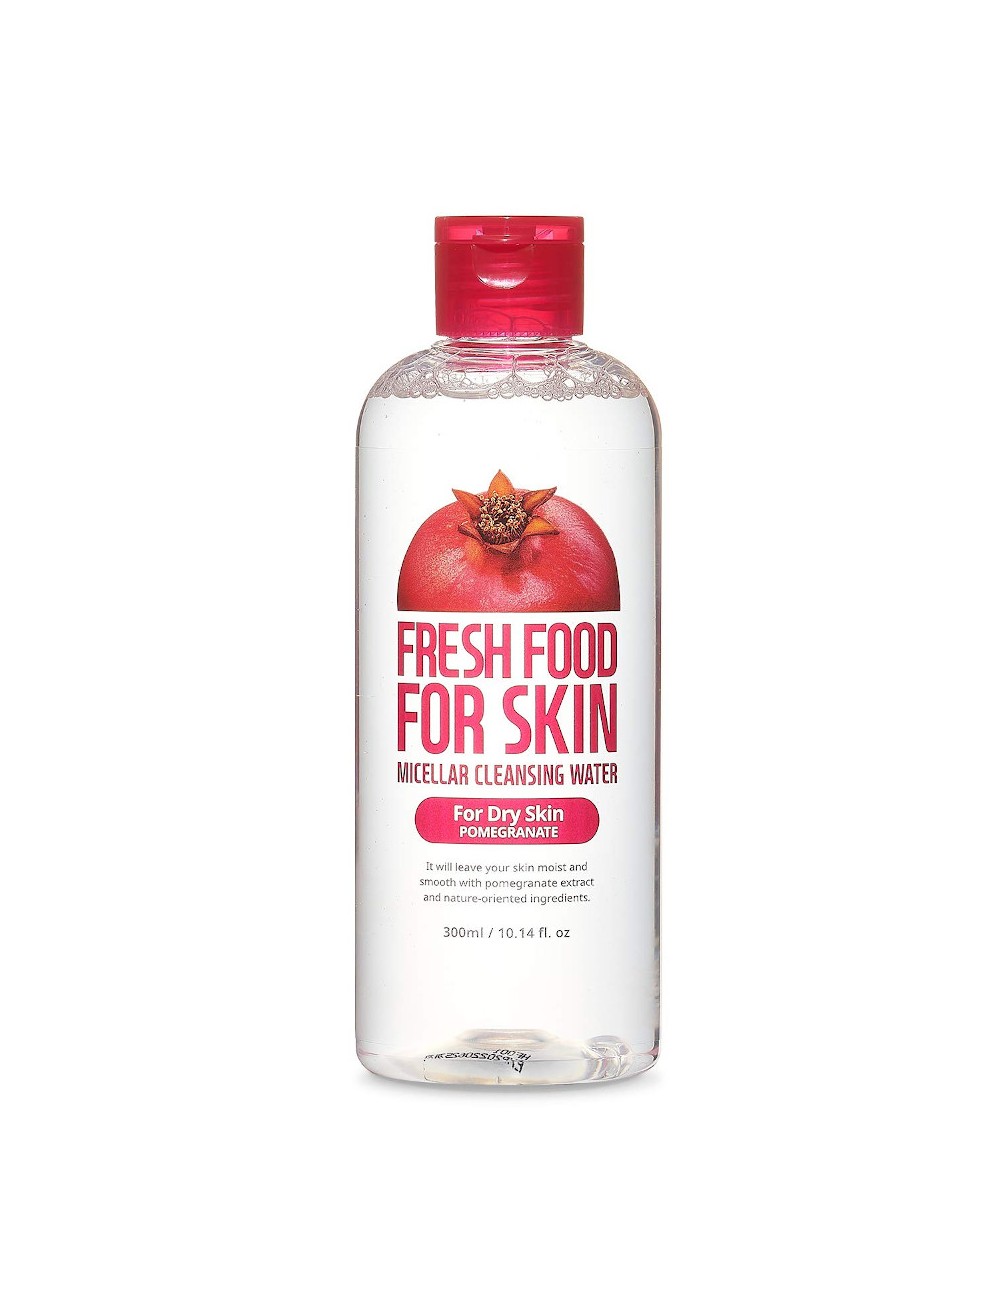 Limpiadoras - Exfoliantes al mejor precio: Fresh Food For Skin Micellar Cleasing Water Pomegranate - Piel Seca de FarmSkin en Skin Thinks - Piel Seca